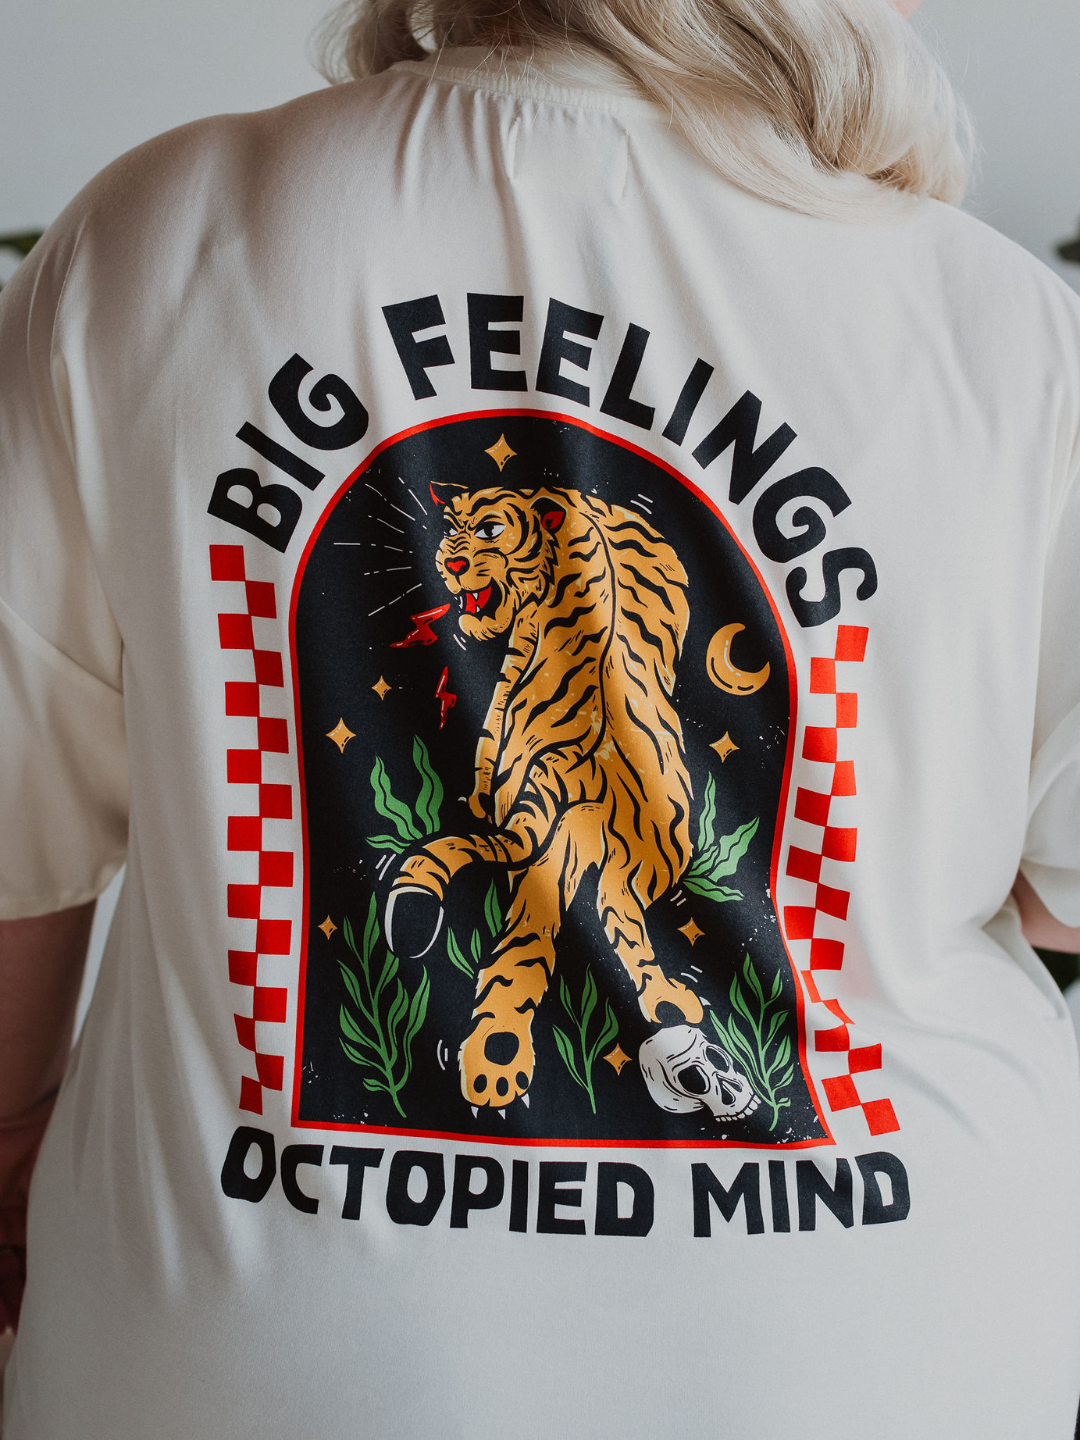 Big Feelings Modal Tee - Octopied Mind